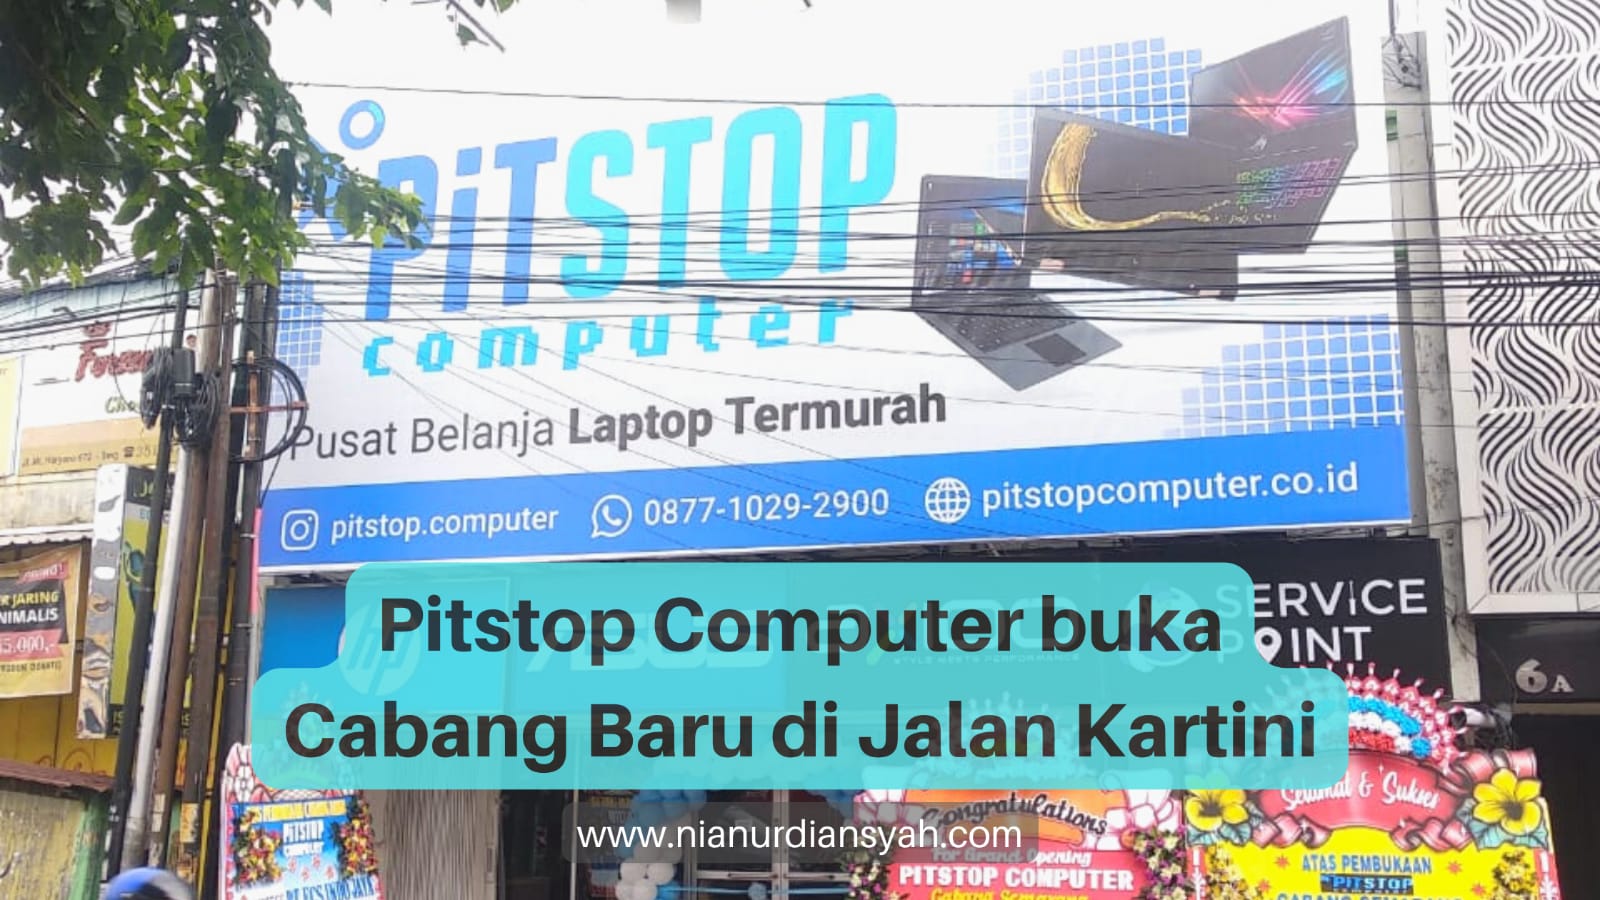 Pitstop Computer Semarang Buka Cabang Baru di Jalan Kartini